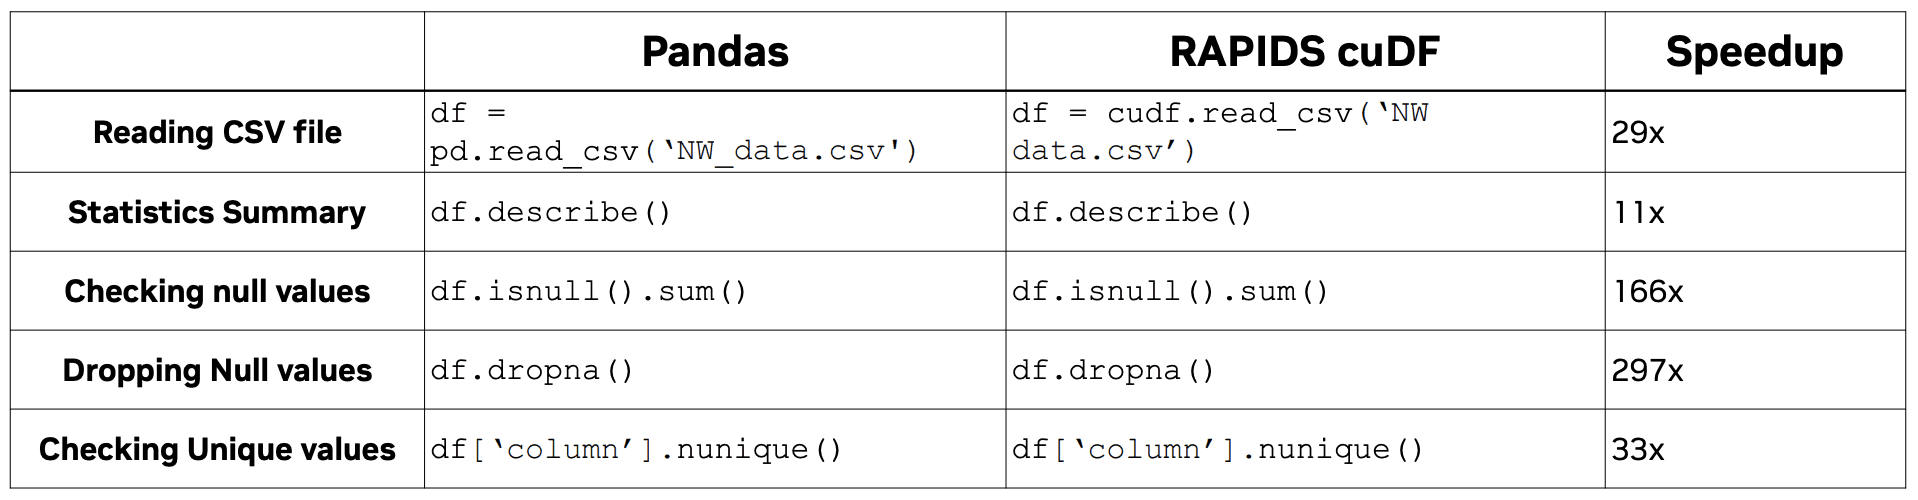 RAPIDS cuDF to Speed up Your Next Data Science Workflow